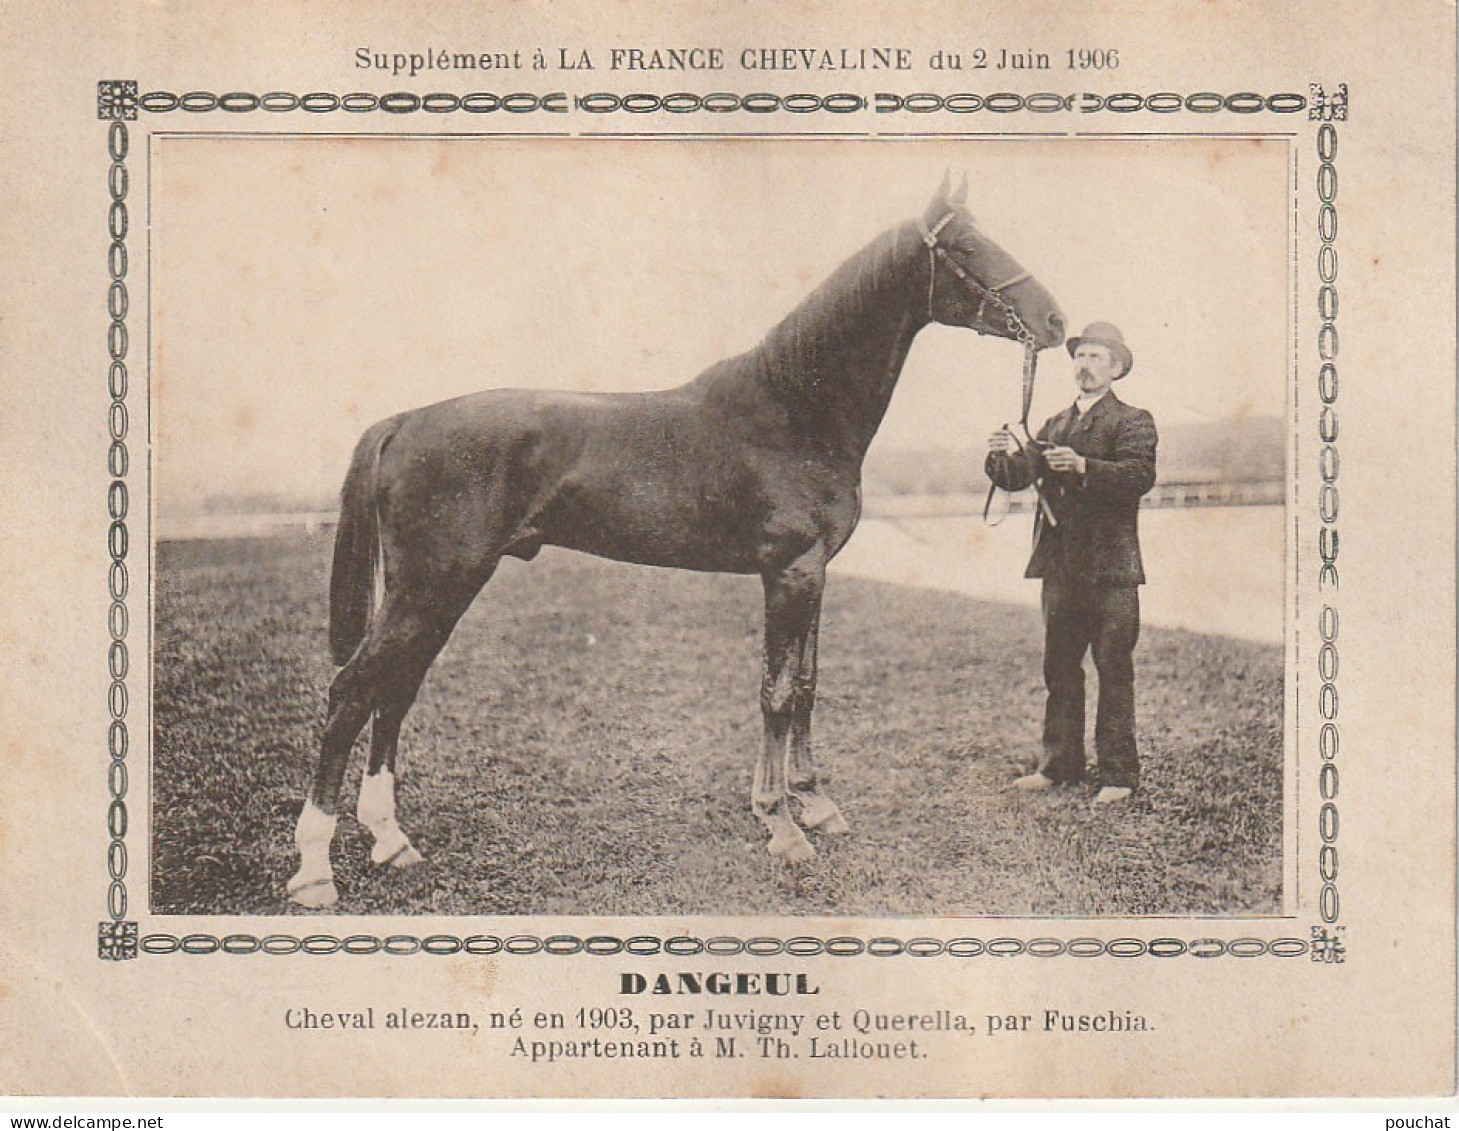 AA+ - " DANGEUL " - CHEVAL ALEZAN APPARTENANT A M. TH. LALLOUET - SUPPL. FRANCE CHEVALINE JUIN 1906 - Horse Show